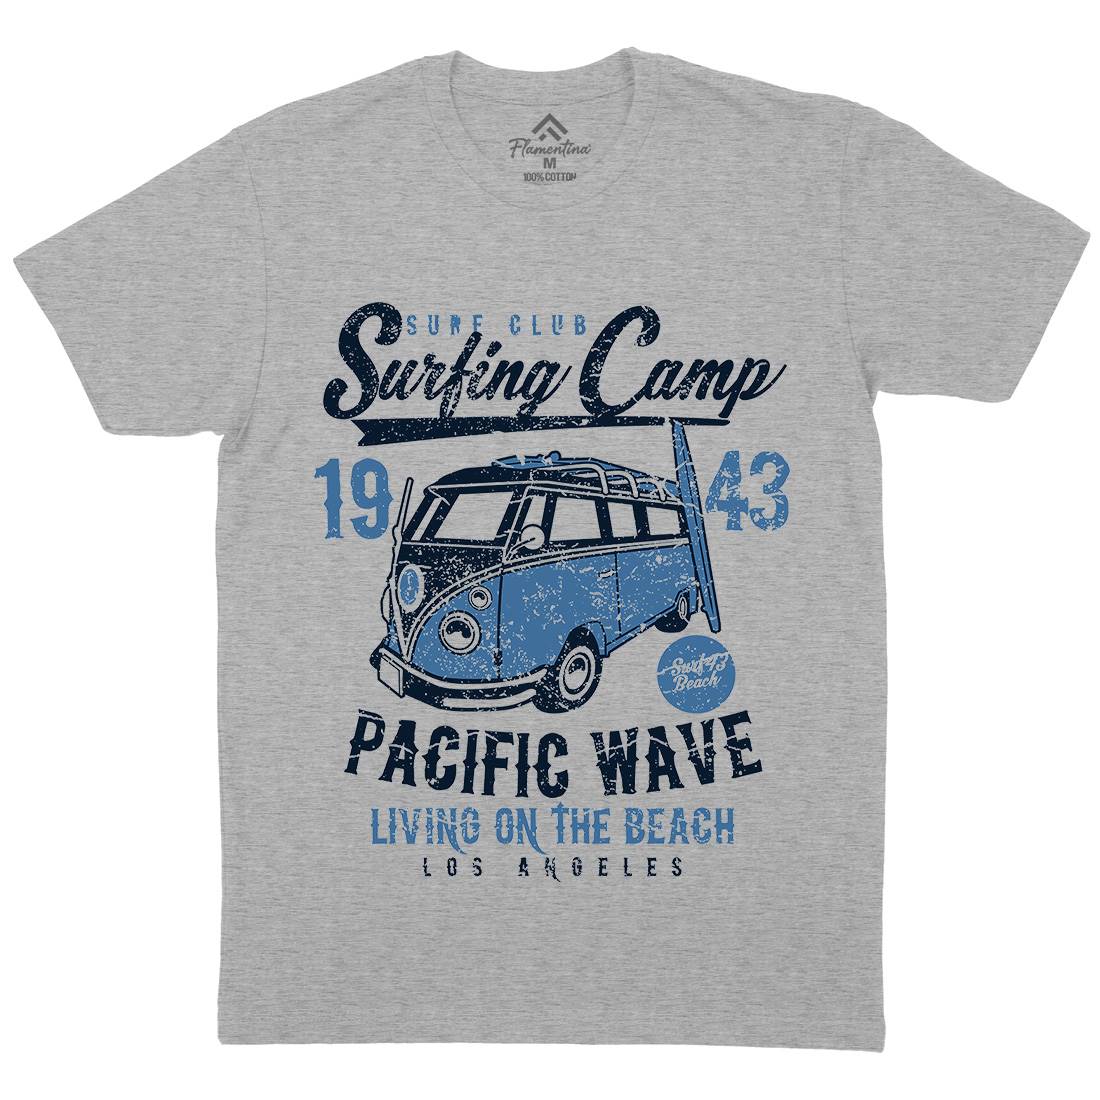 Surfing Camp Mens Crew Neck T-Shirt Surf A170